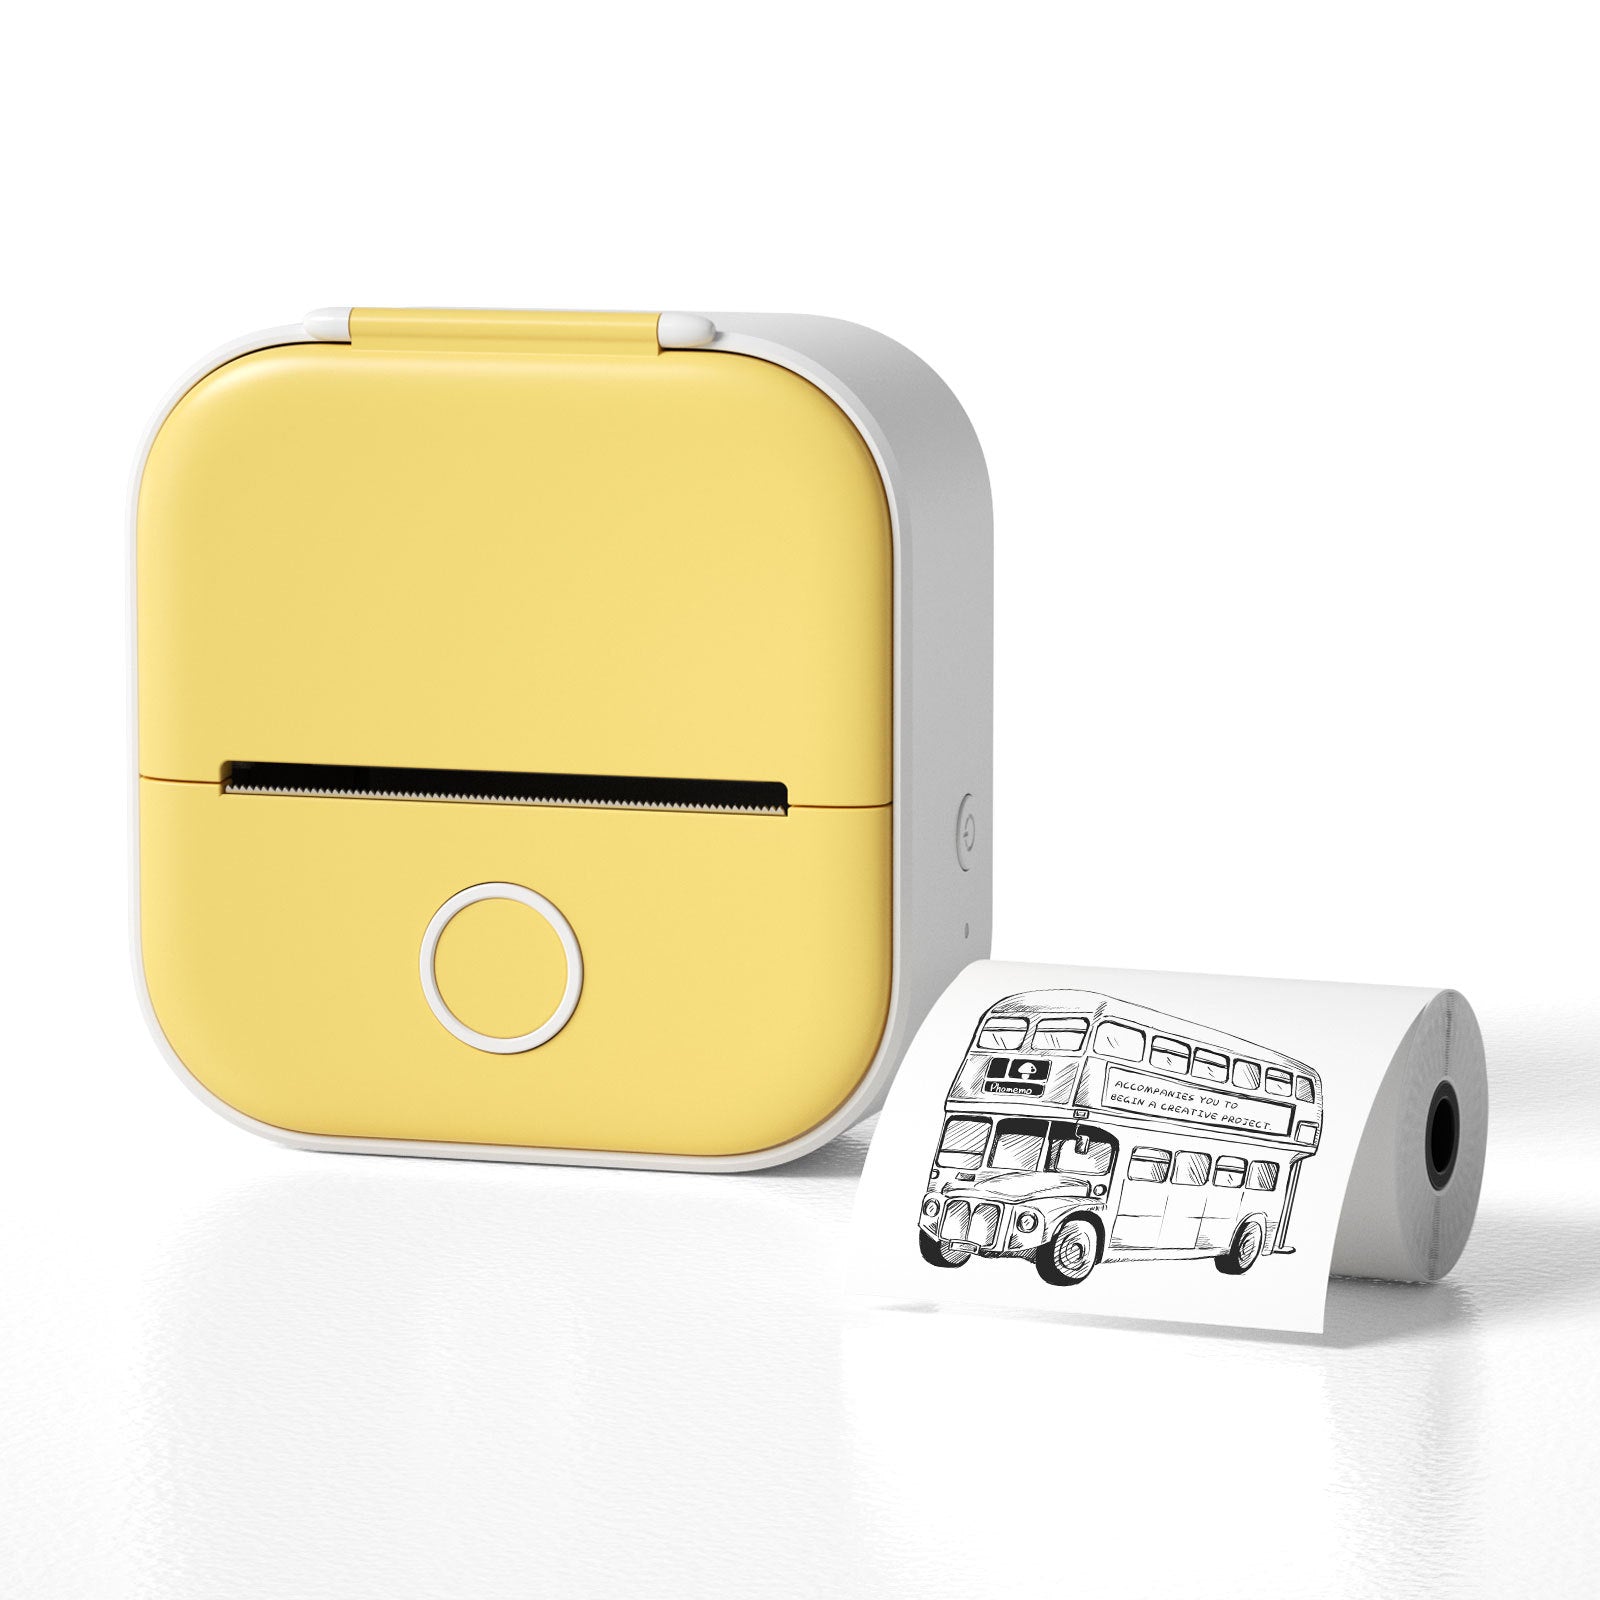 Mini impresora portatil amarilla 